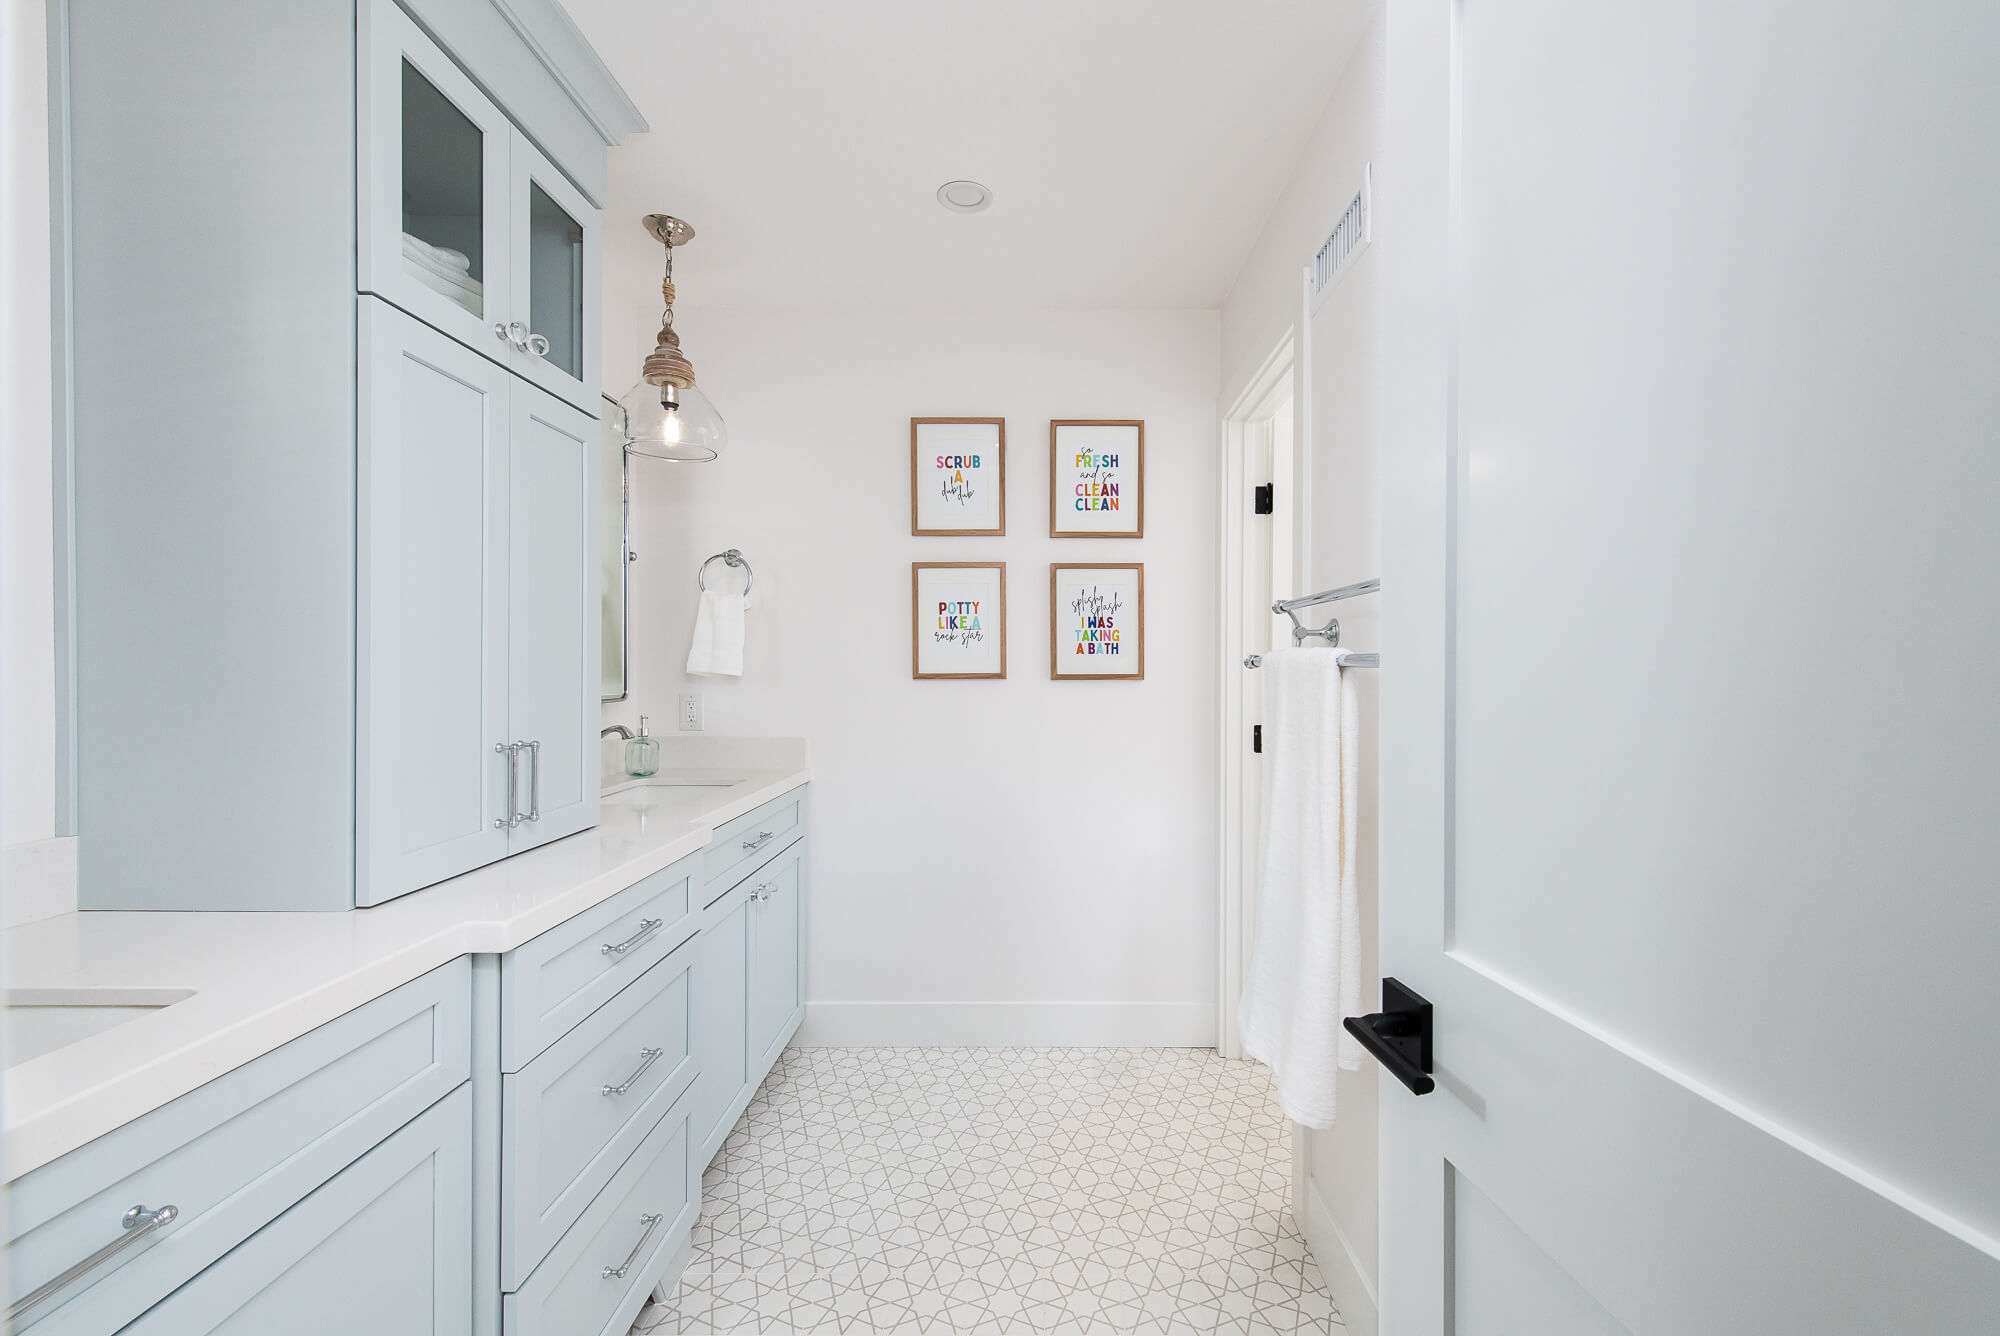 Geometric floor tile in kids' bathroom remodel - How To Choose The Right Flooring